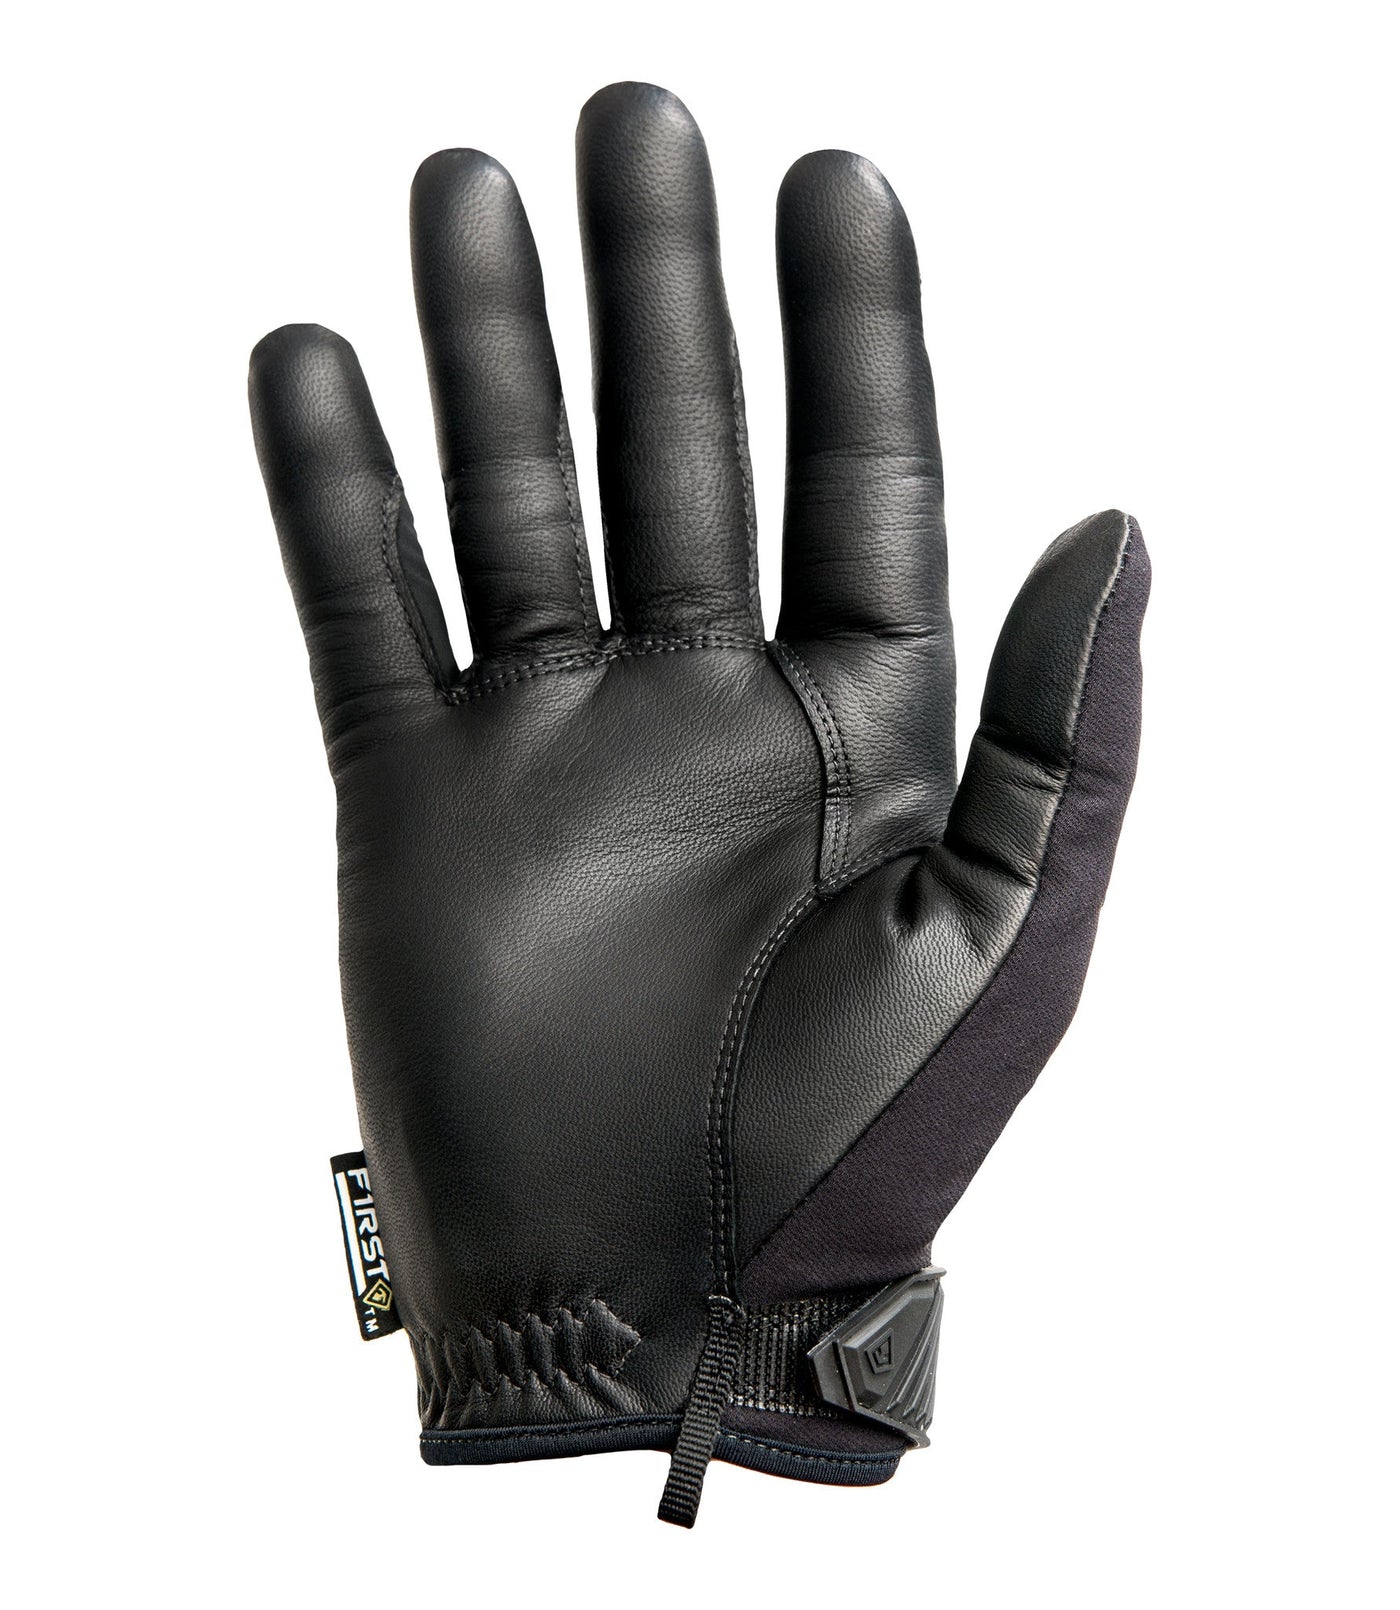 Palm of Men’s Medium Duty Padded Glove in Black